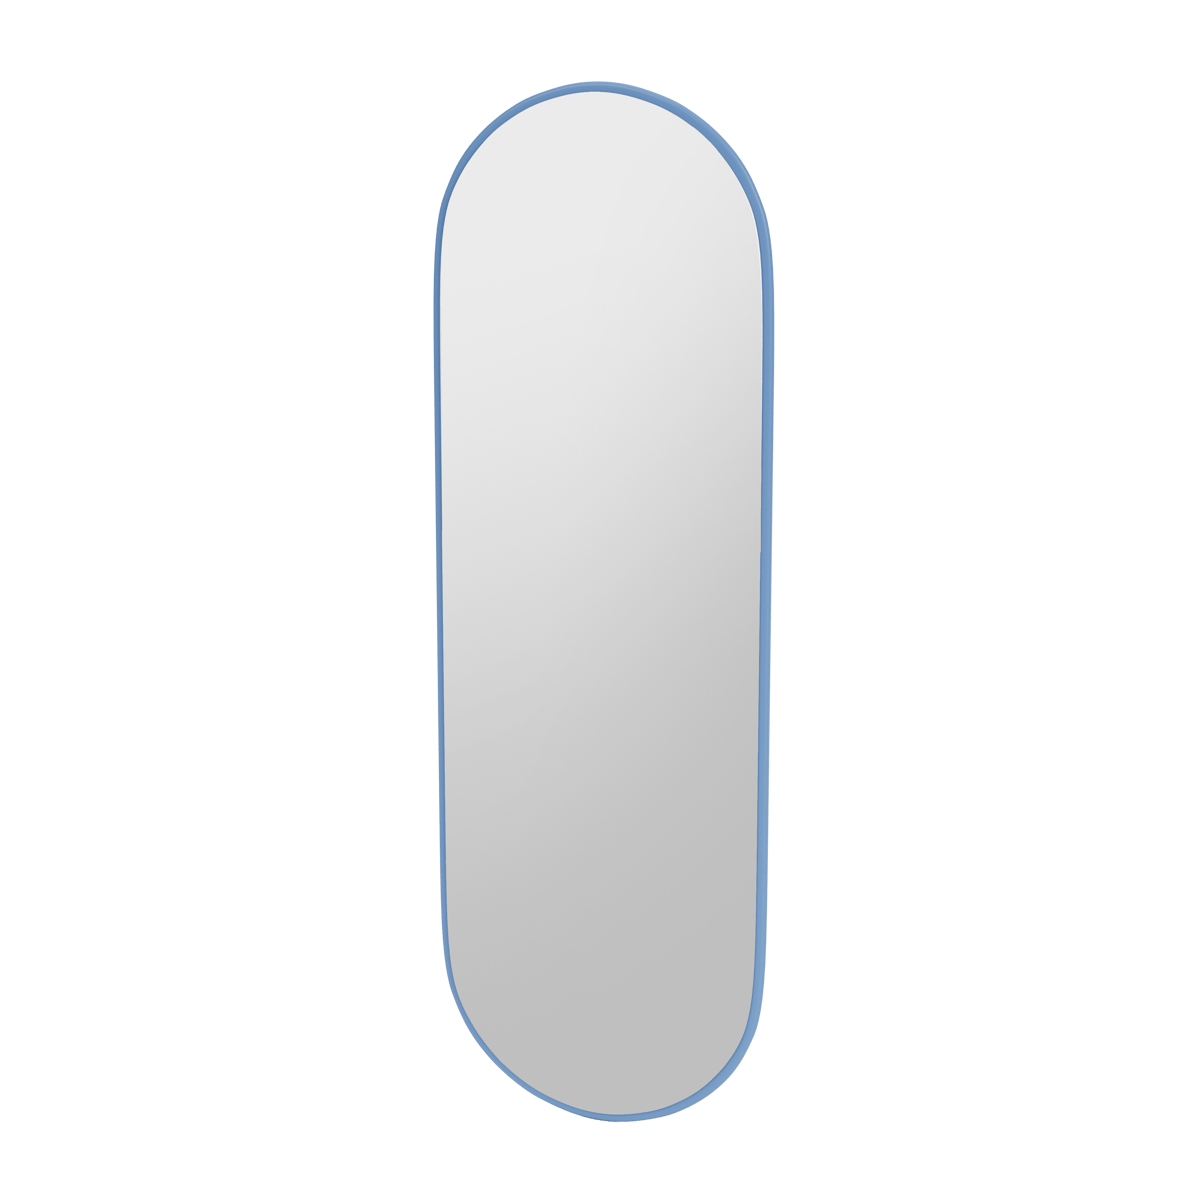 Montana FIGURE Mirror peili – SP824R Azure